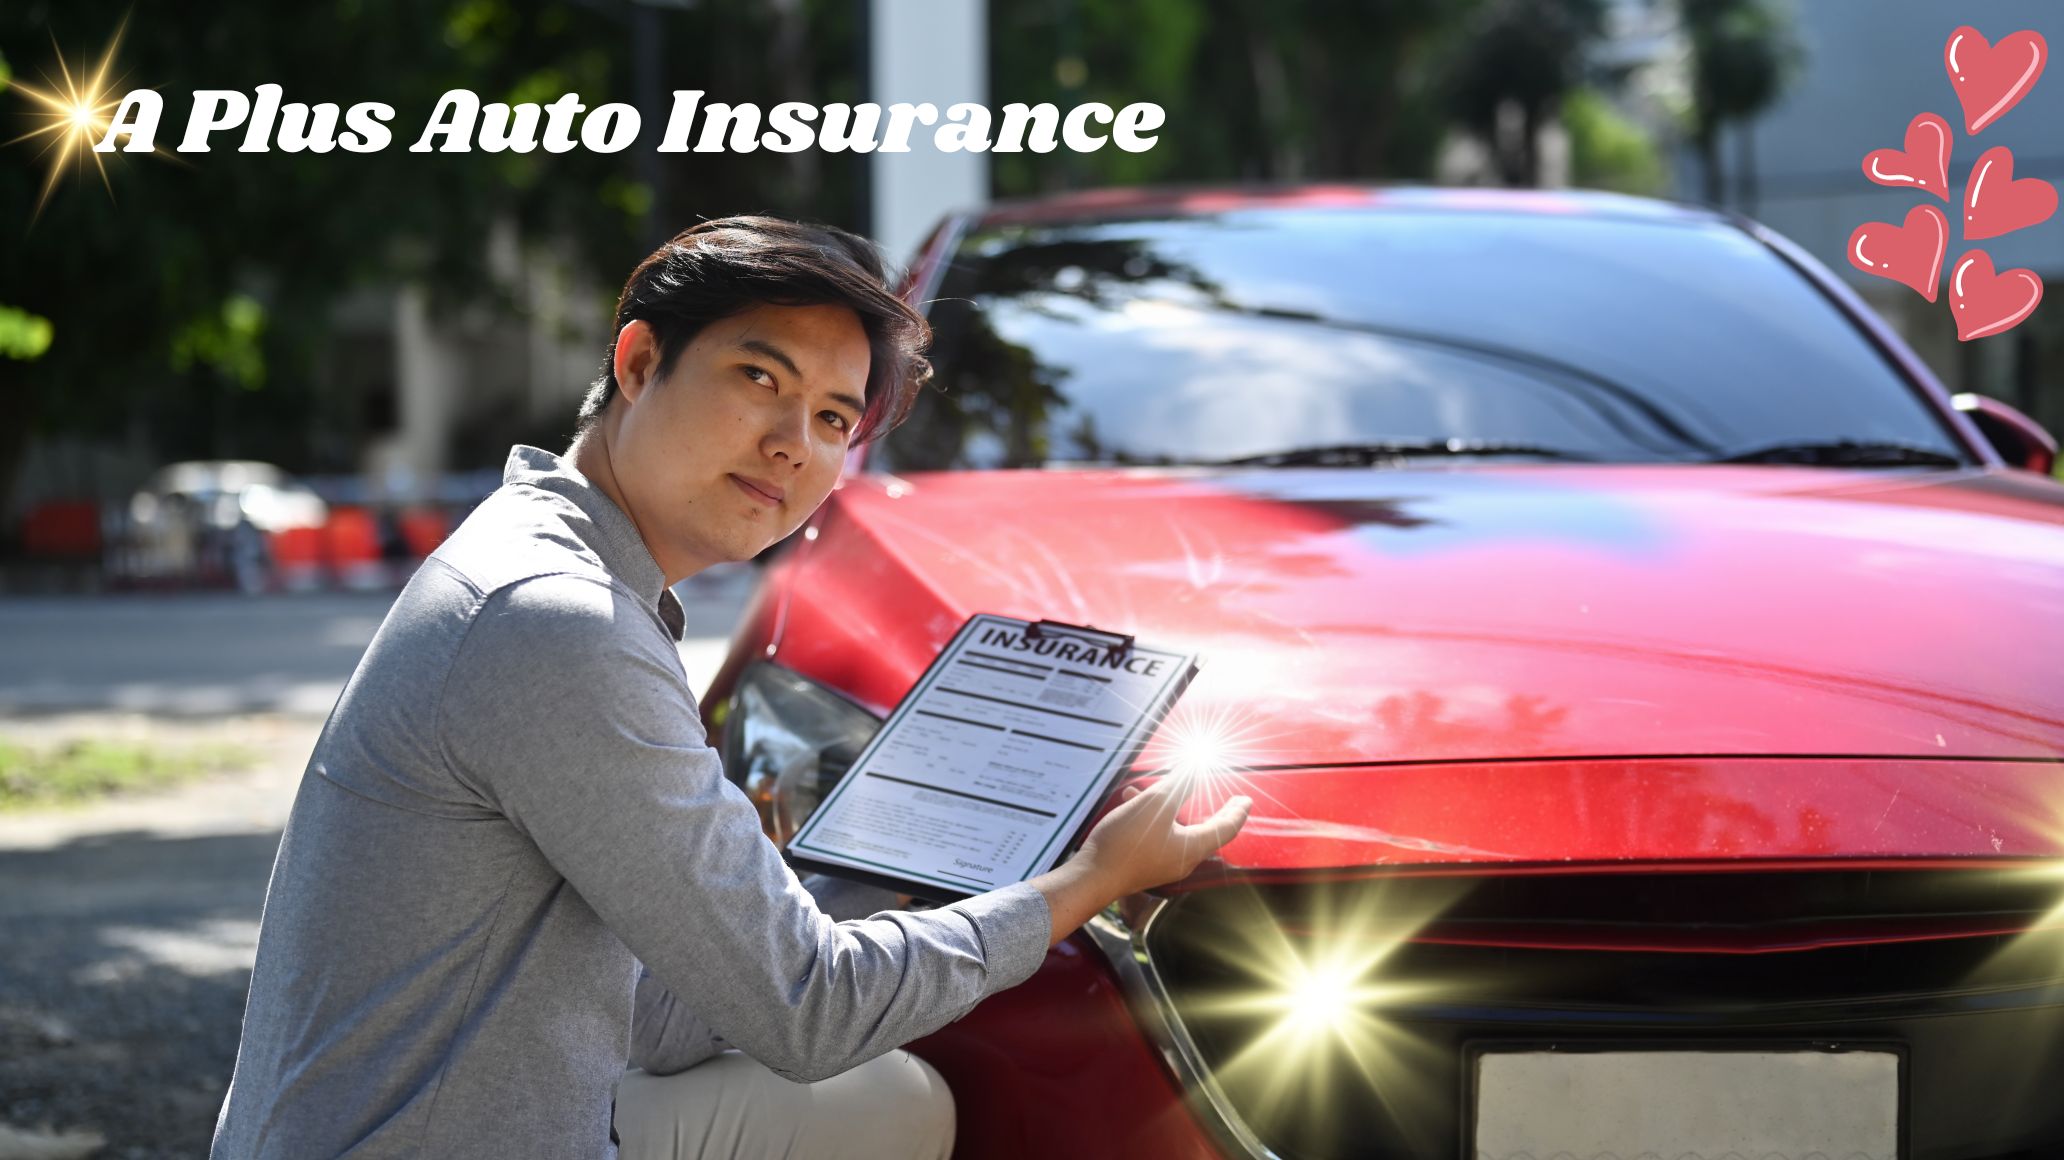 A Plus Auto Insurance